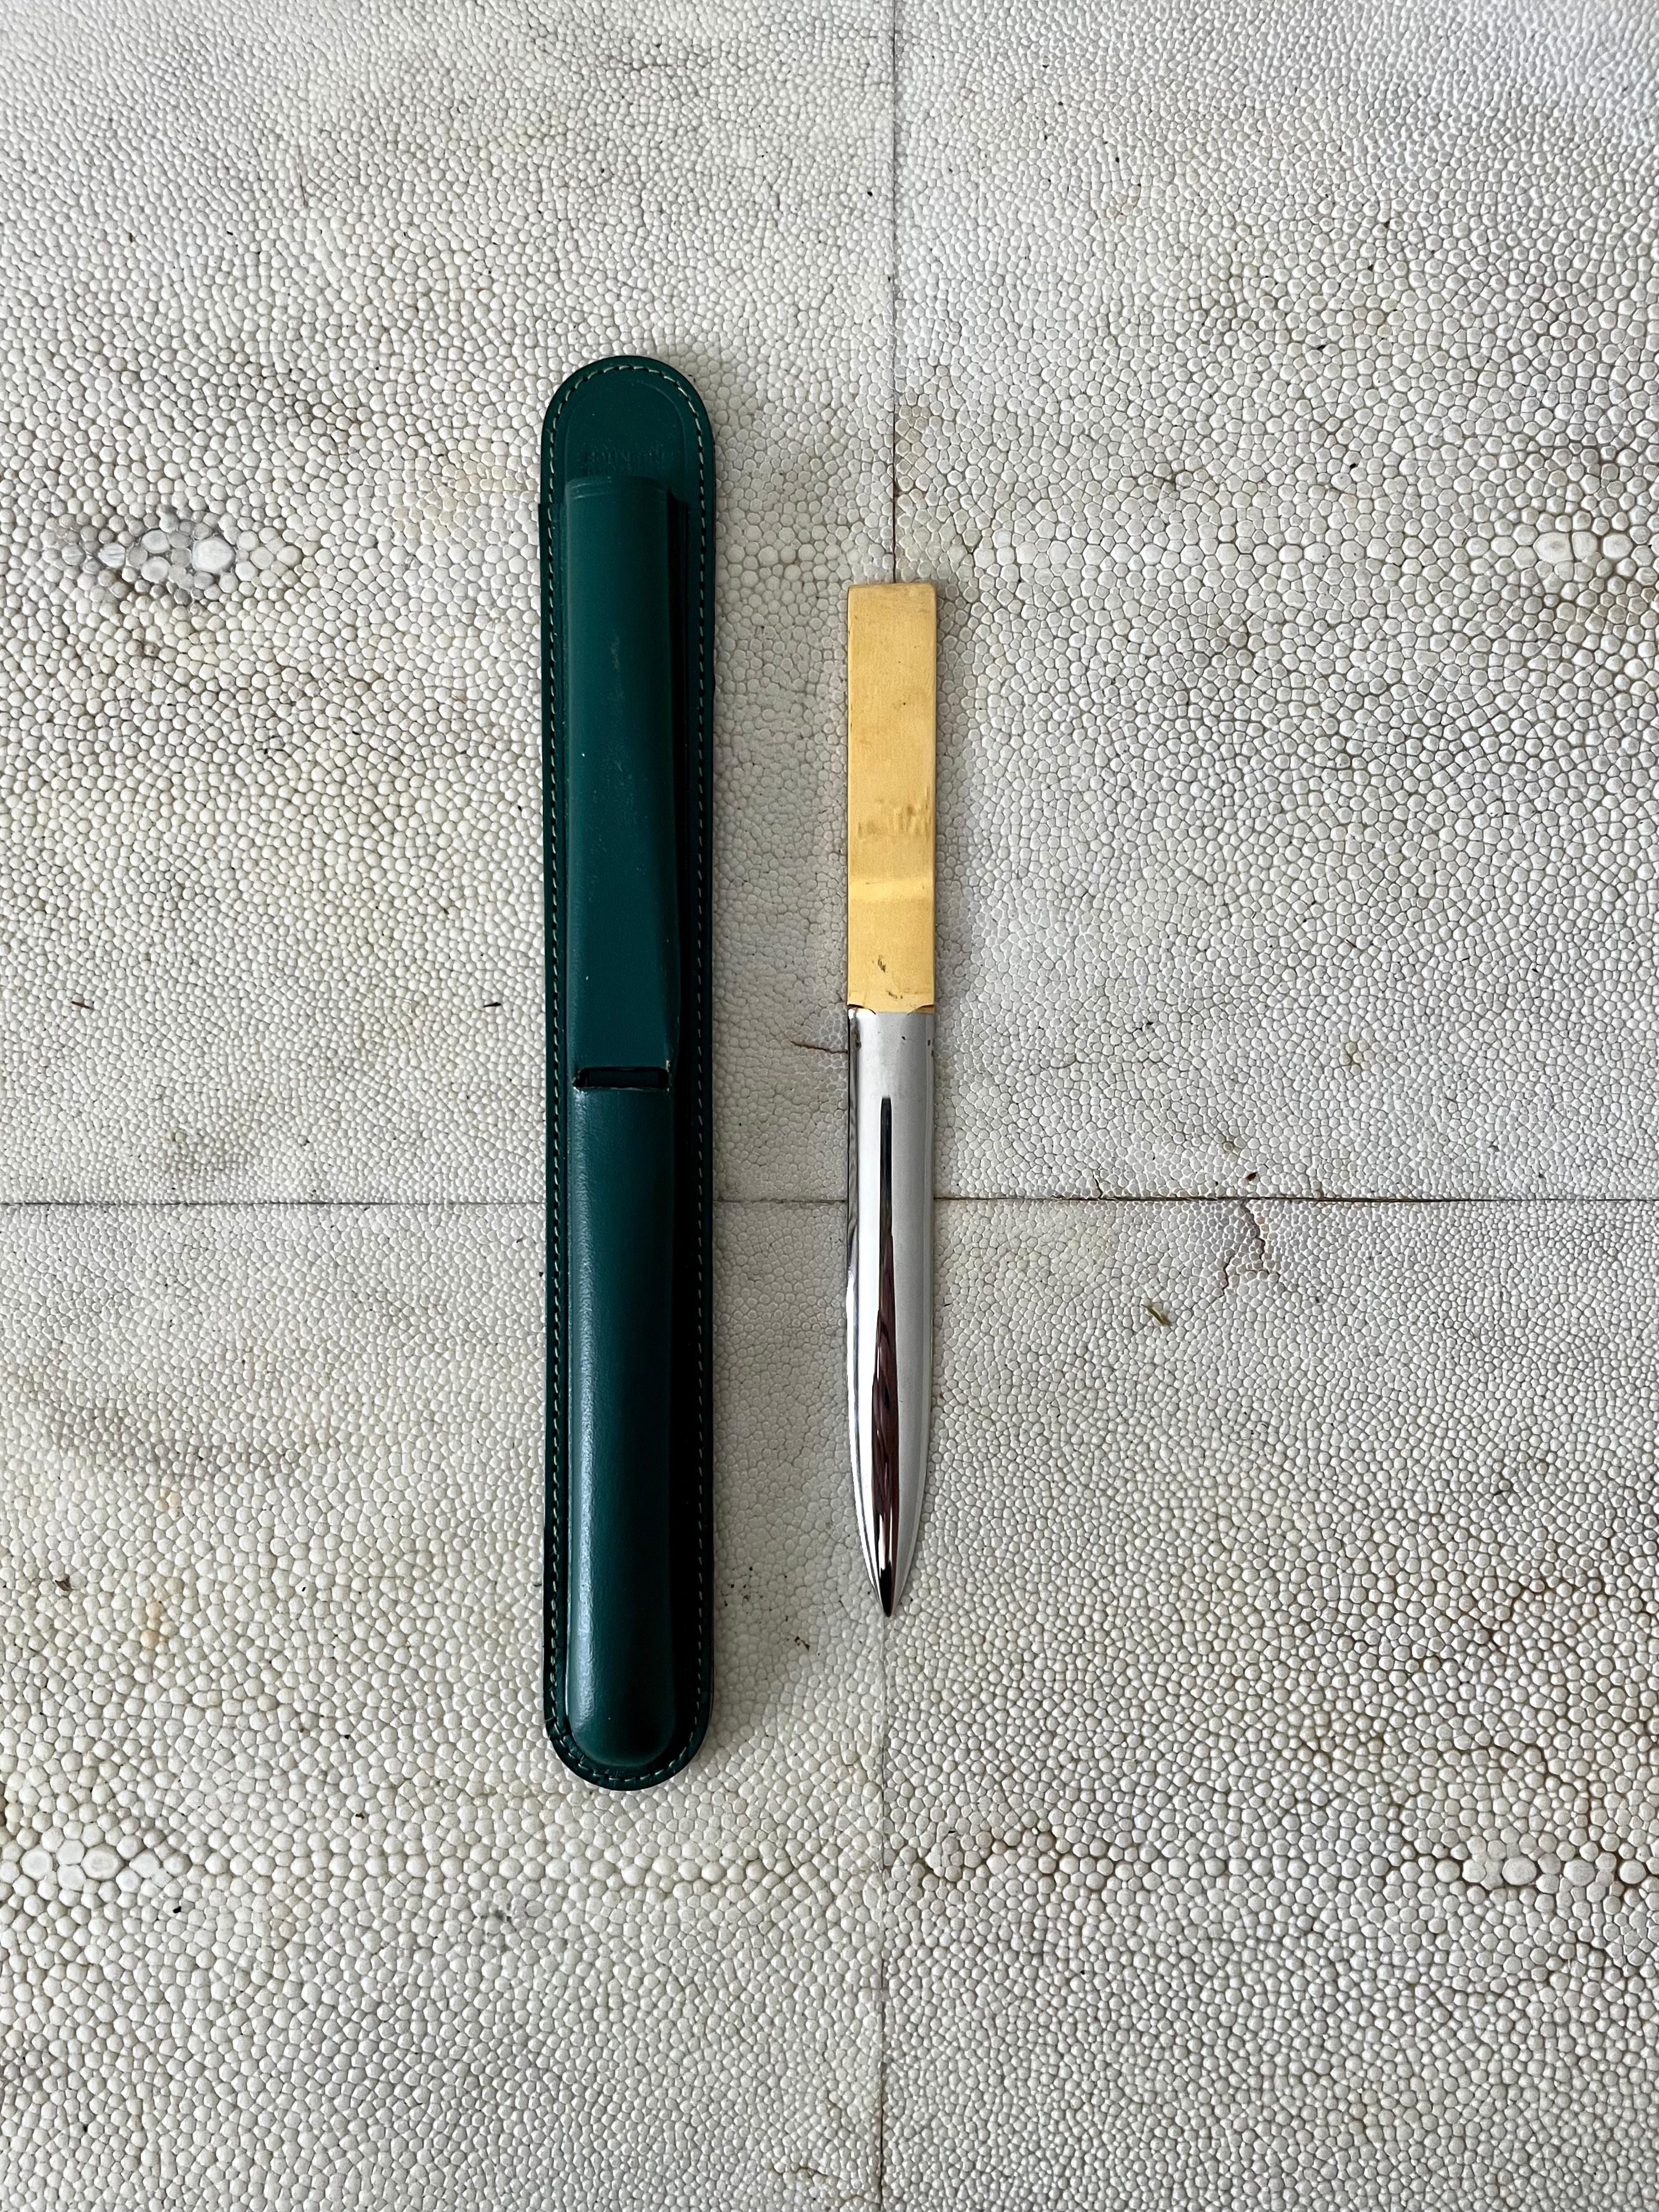 Solingen Scissors and Letter Opener in Green Leather Case 1